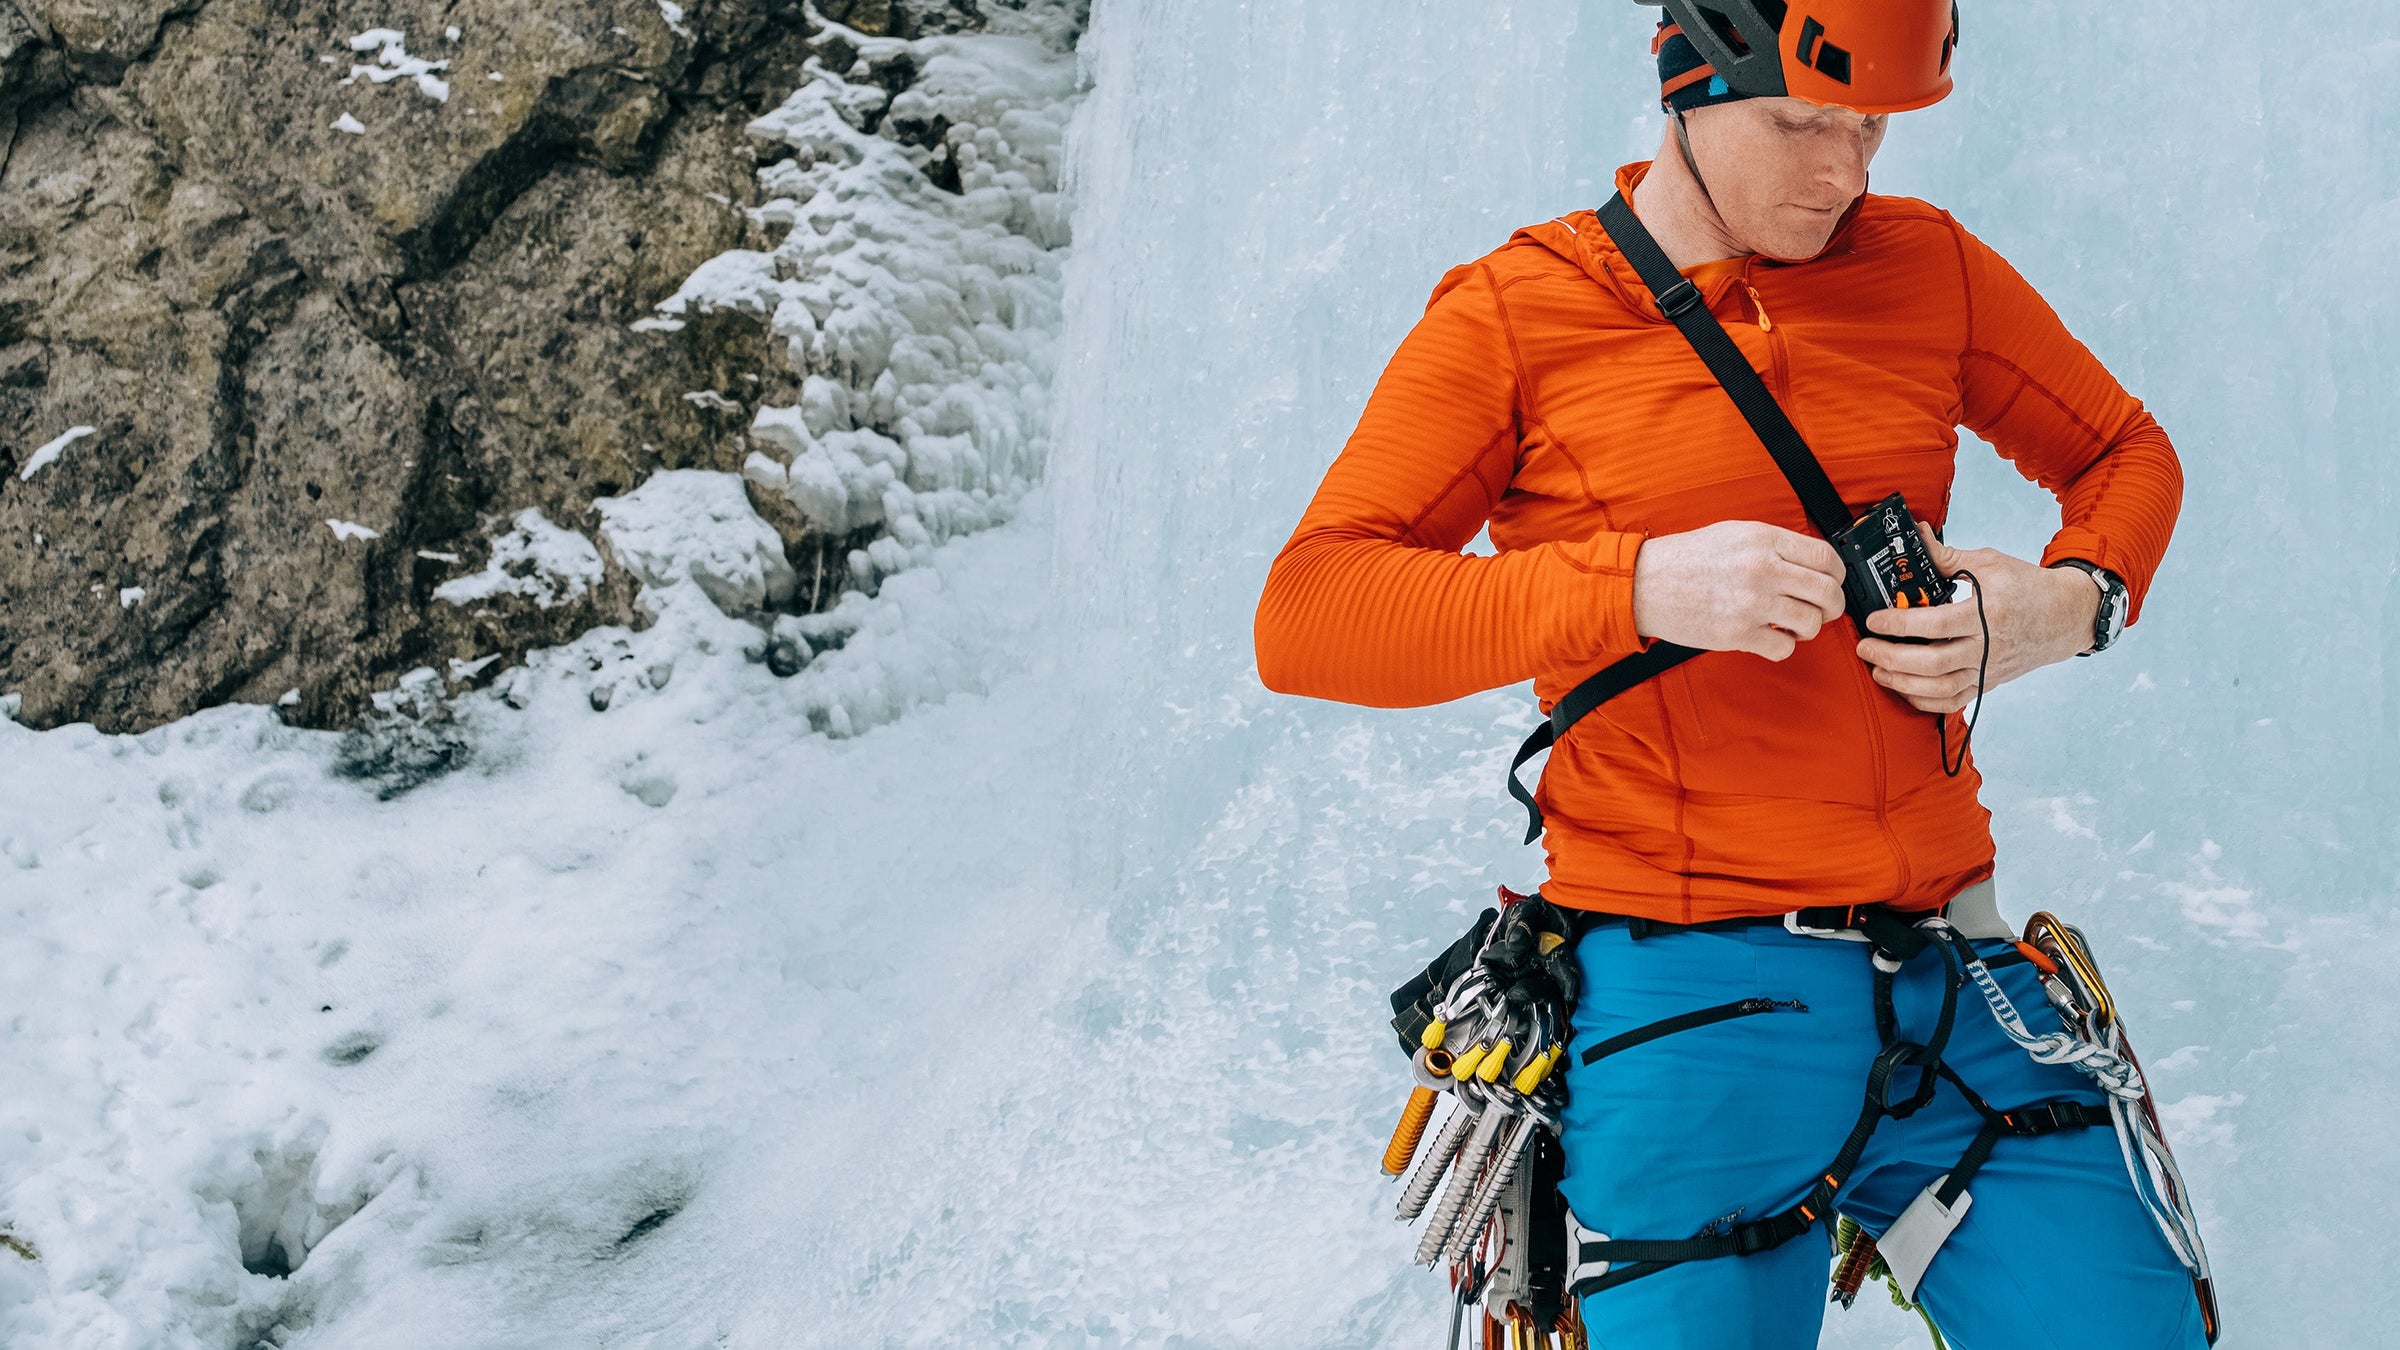 An ice climber turns on an avalanche transceiver before climbing a frozen waterfall